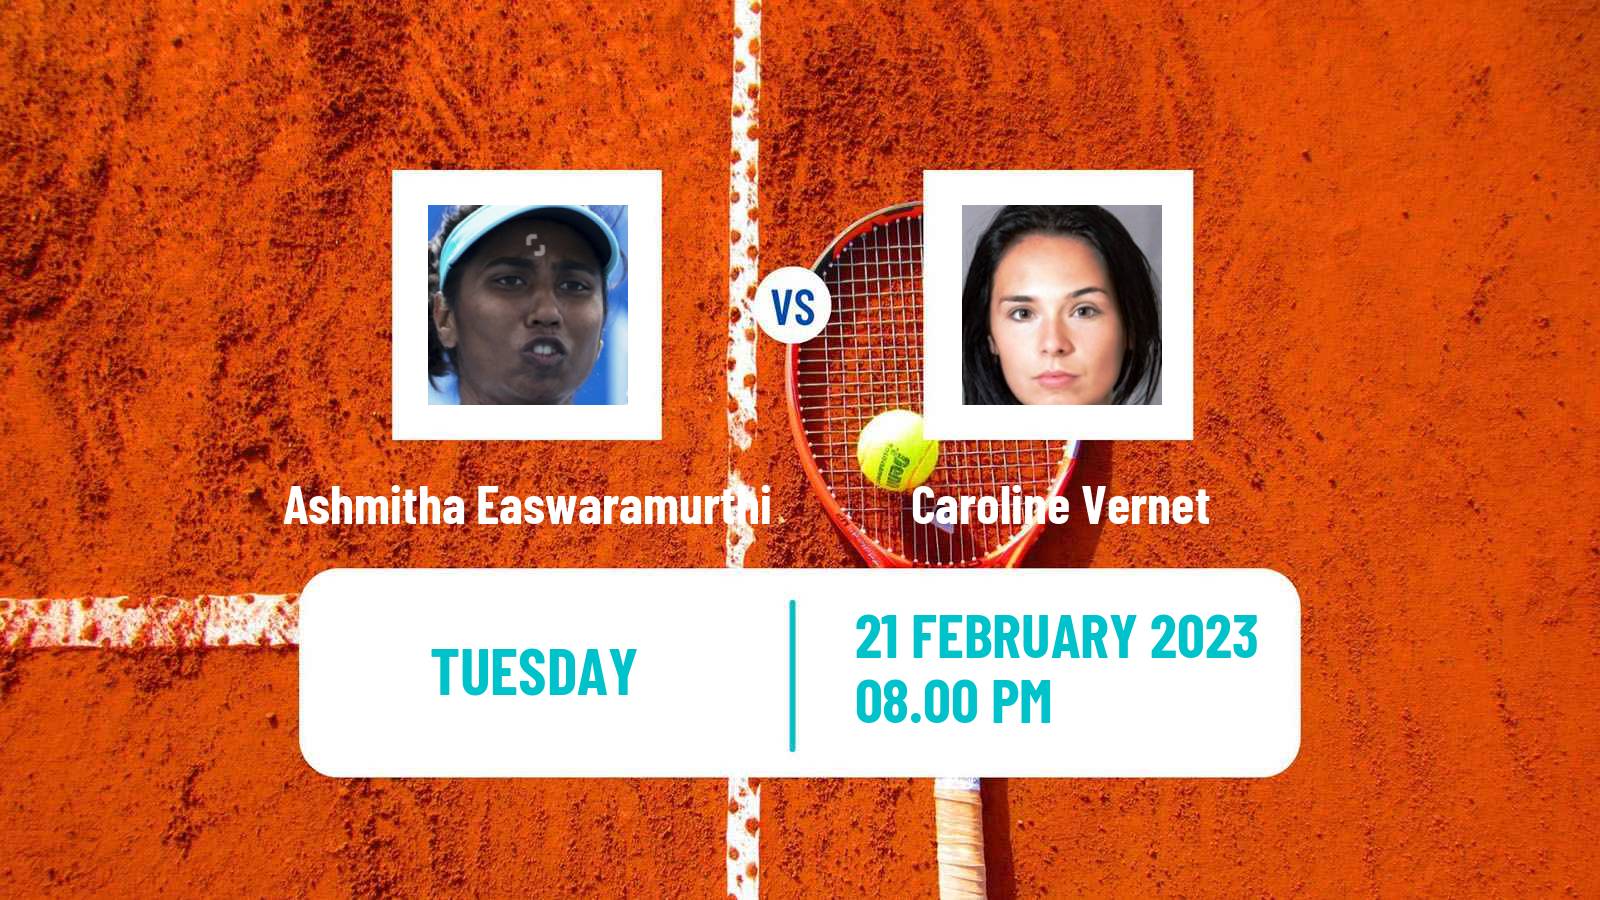 Tennis ITF Tournaments Ashmitha Easwaramurthi - Caroline Vernet